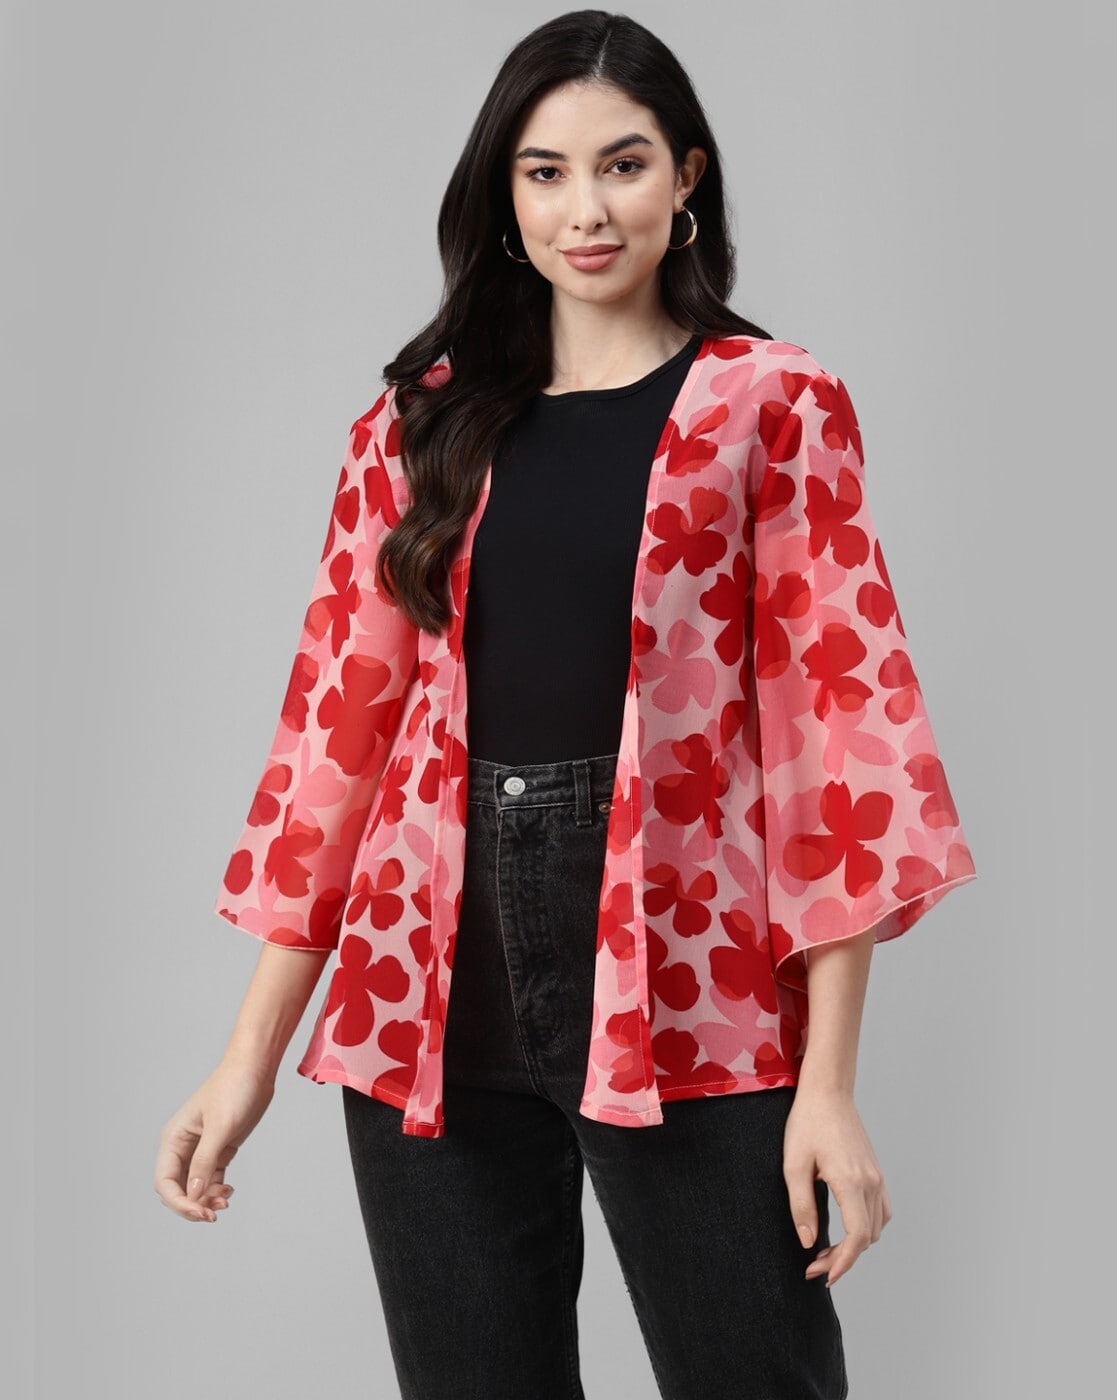 BOBOYOYO Girl's Cardigan Sweater Long Sleeve Bow Shrug Short Cotton Dress  Cover Up 3-12Y (Red, 11-12Y/152CM) : Amazon.in: Fashion